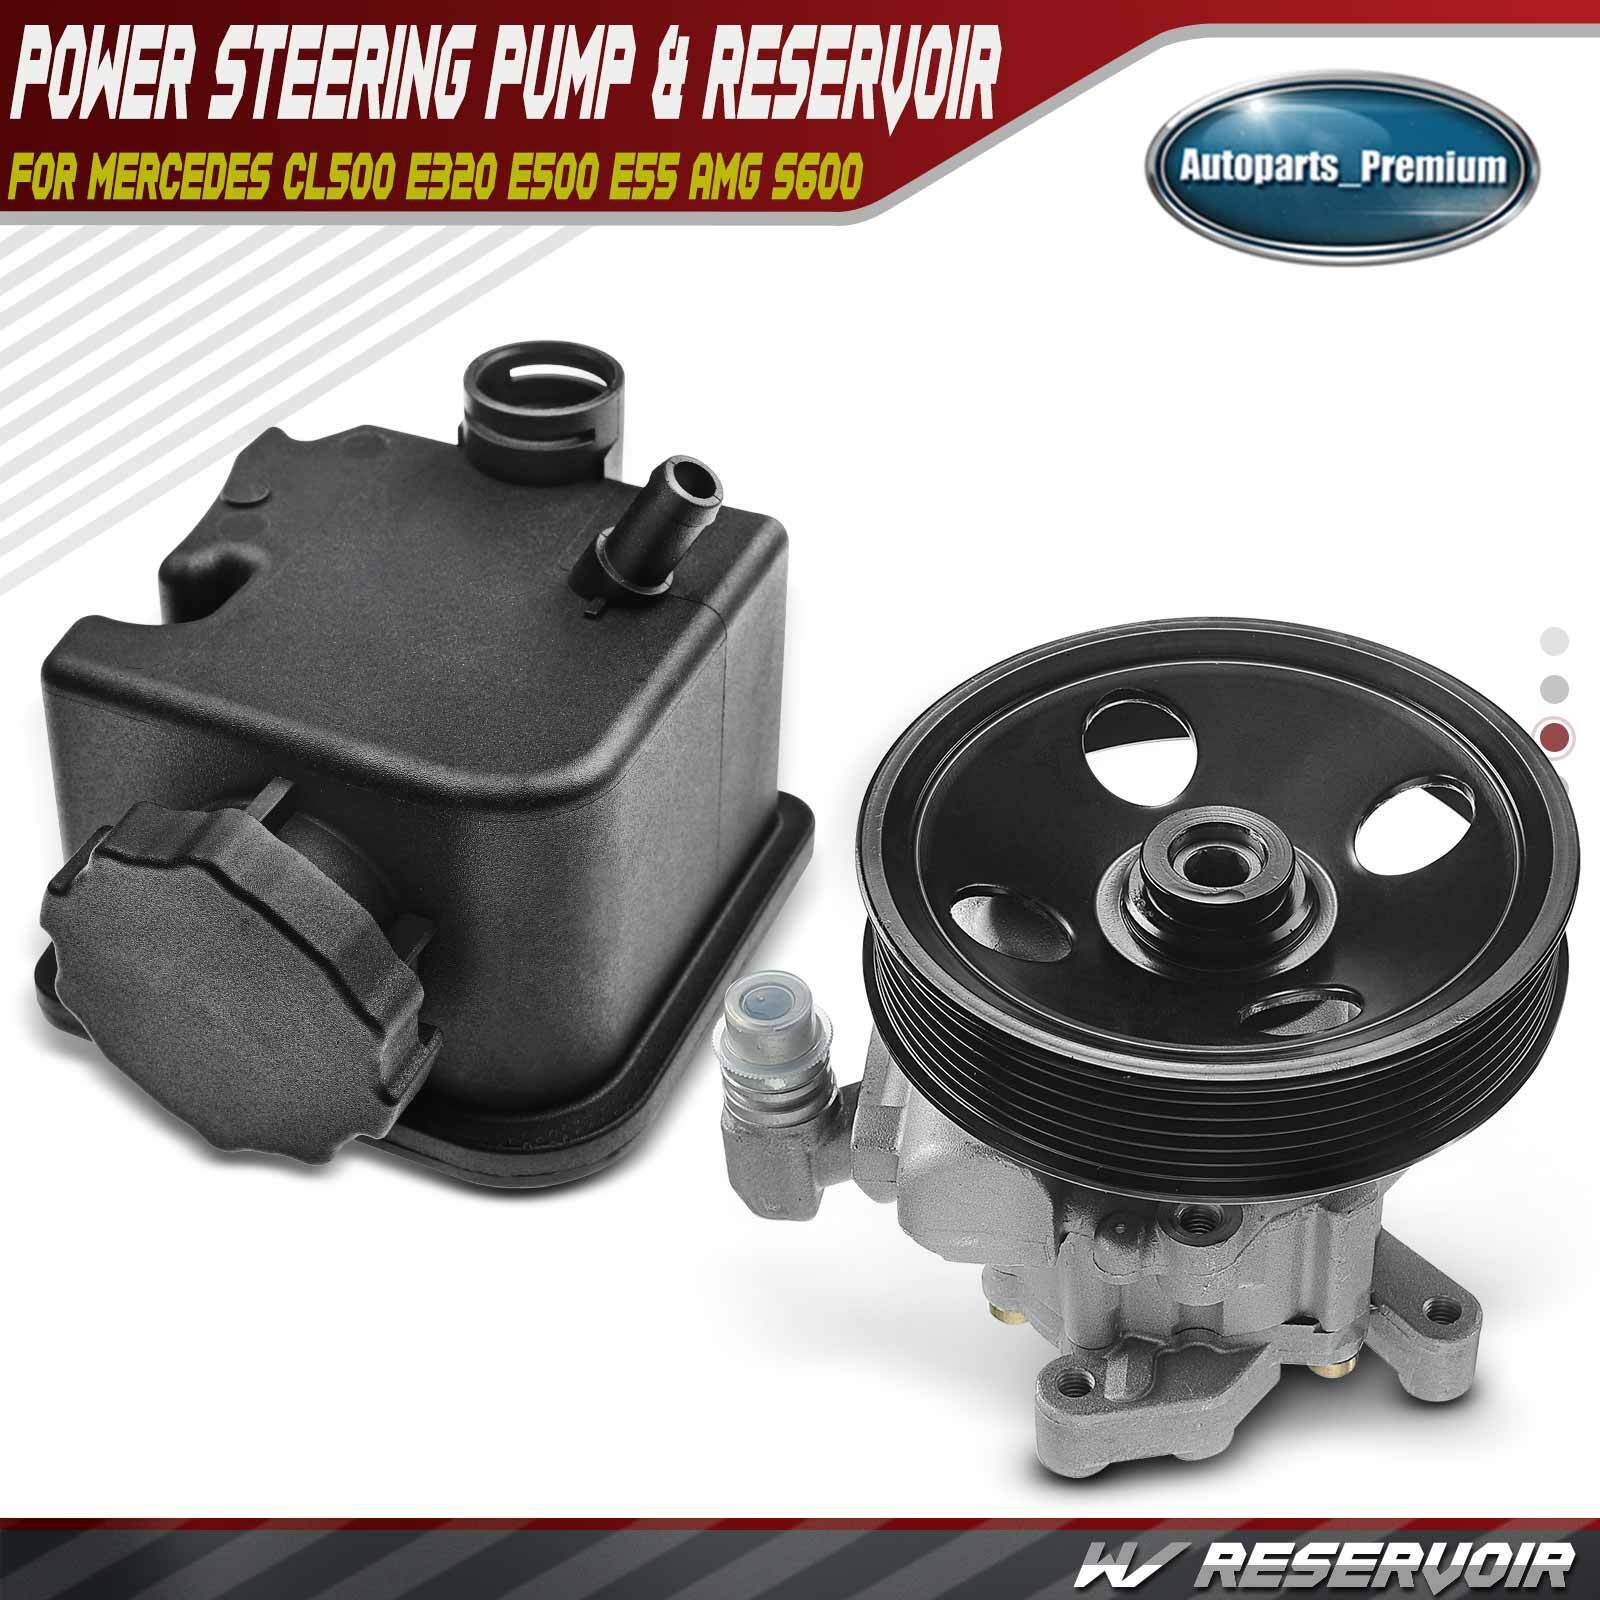 Power Steering Pump w/ Reservoir for Mercedes-Benz CL500 E320 E500 E55 AMG S600